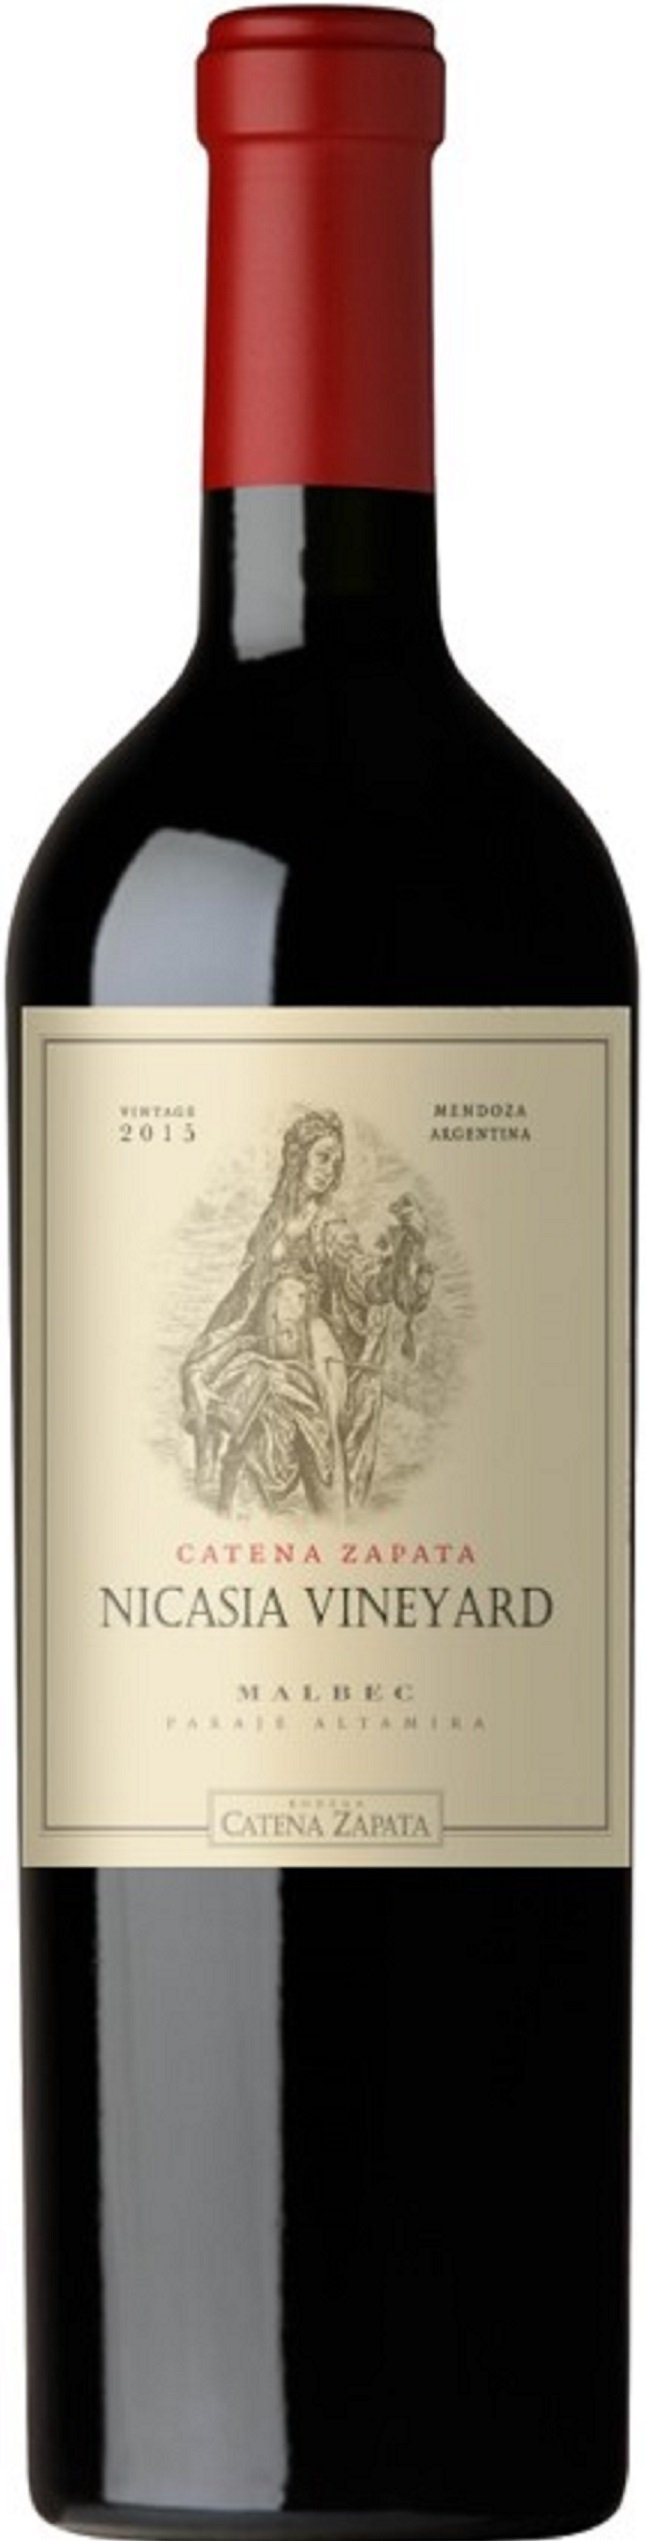 Catena Zapata Malbec Nicasia Vineyard 2015